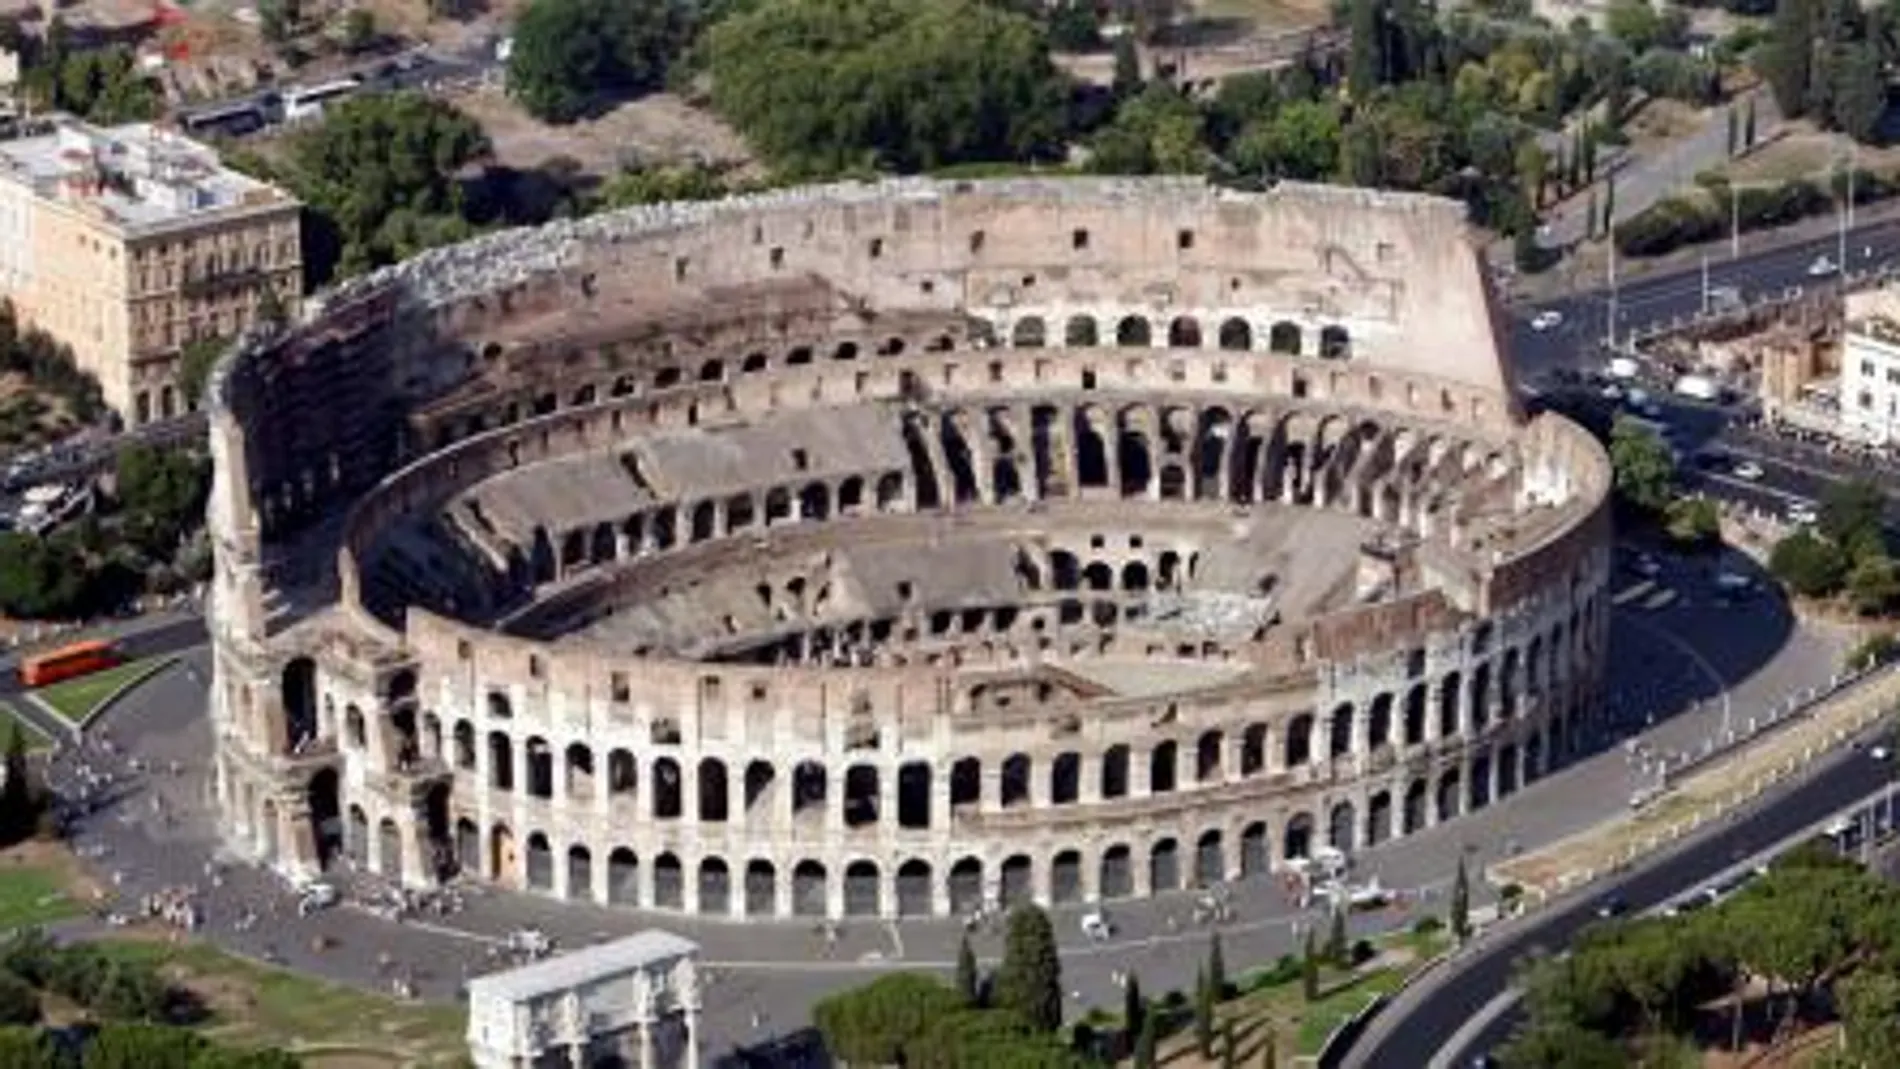 Imagen aérea del coliseo romano